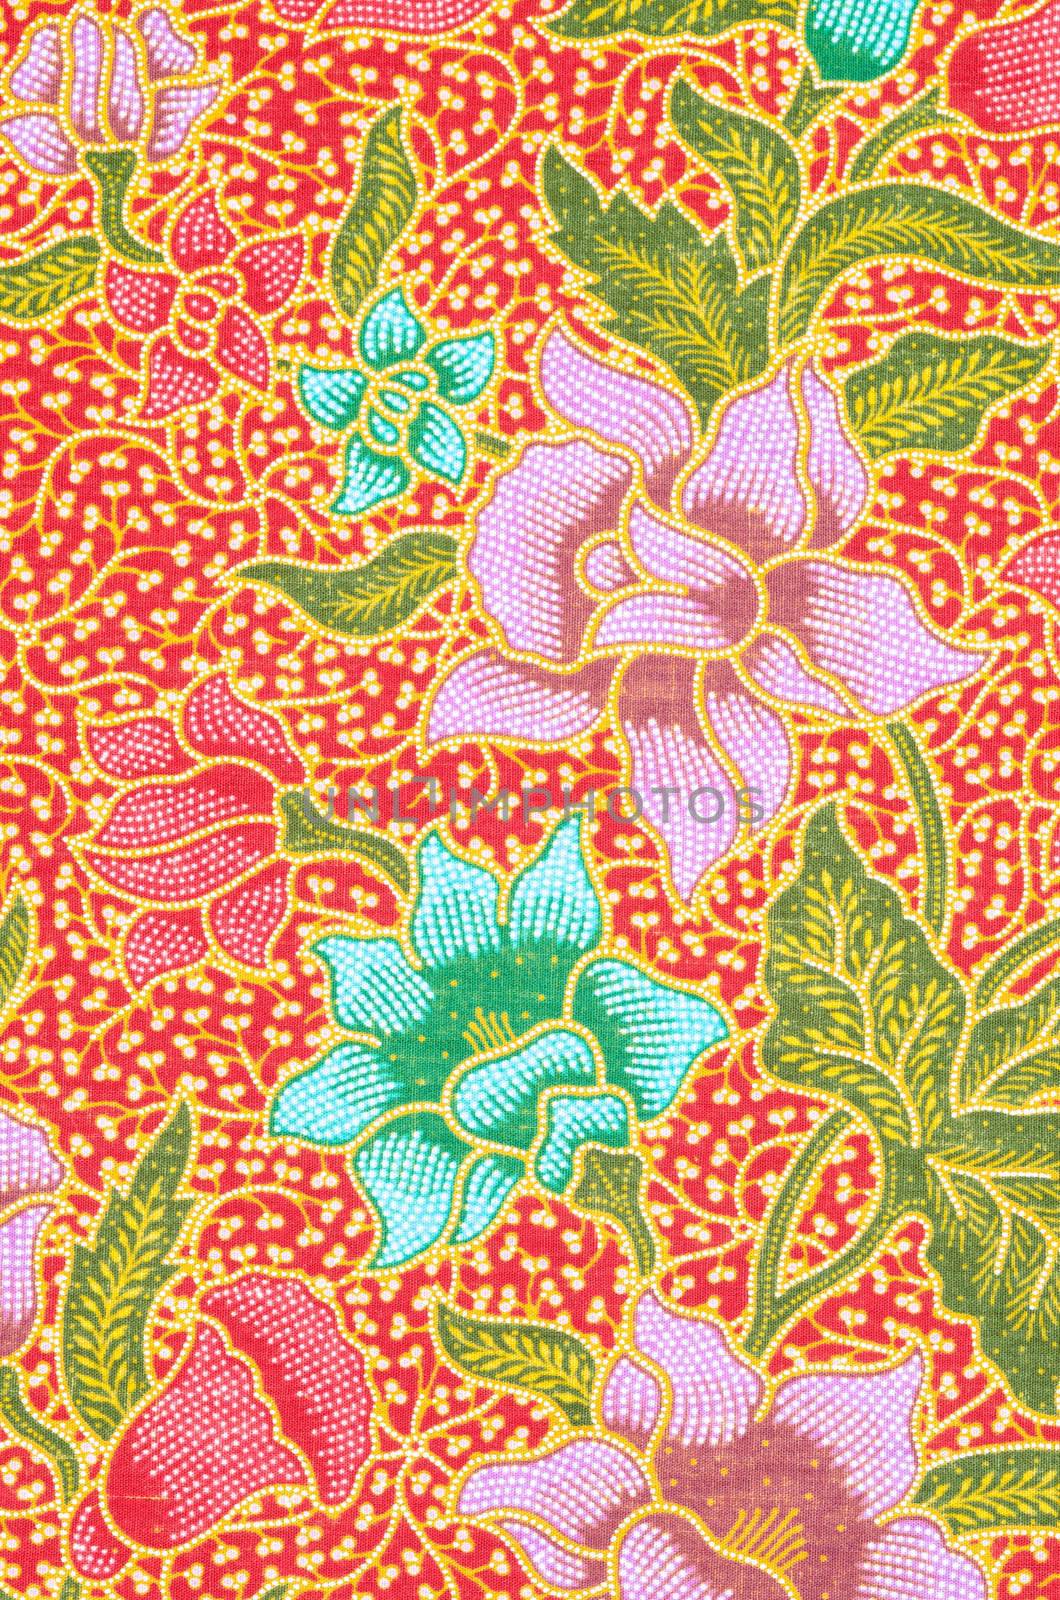 flower pattern background on batik fabric. by Gamjai